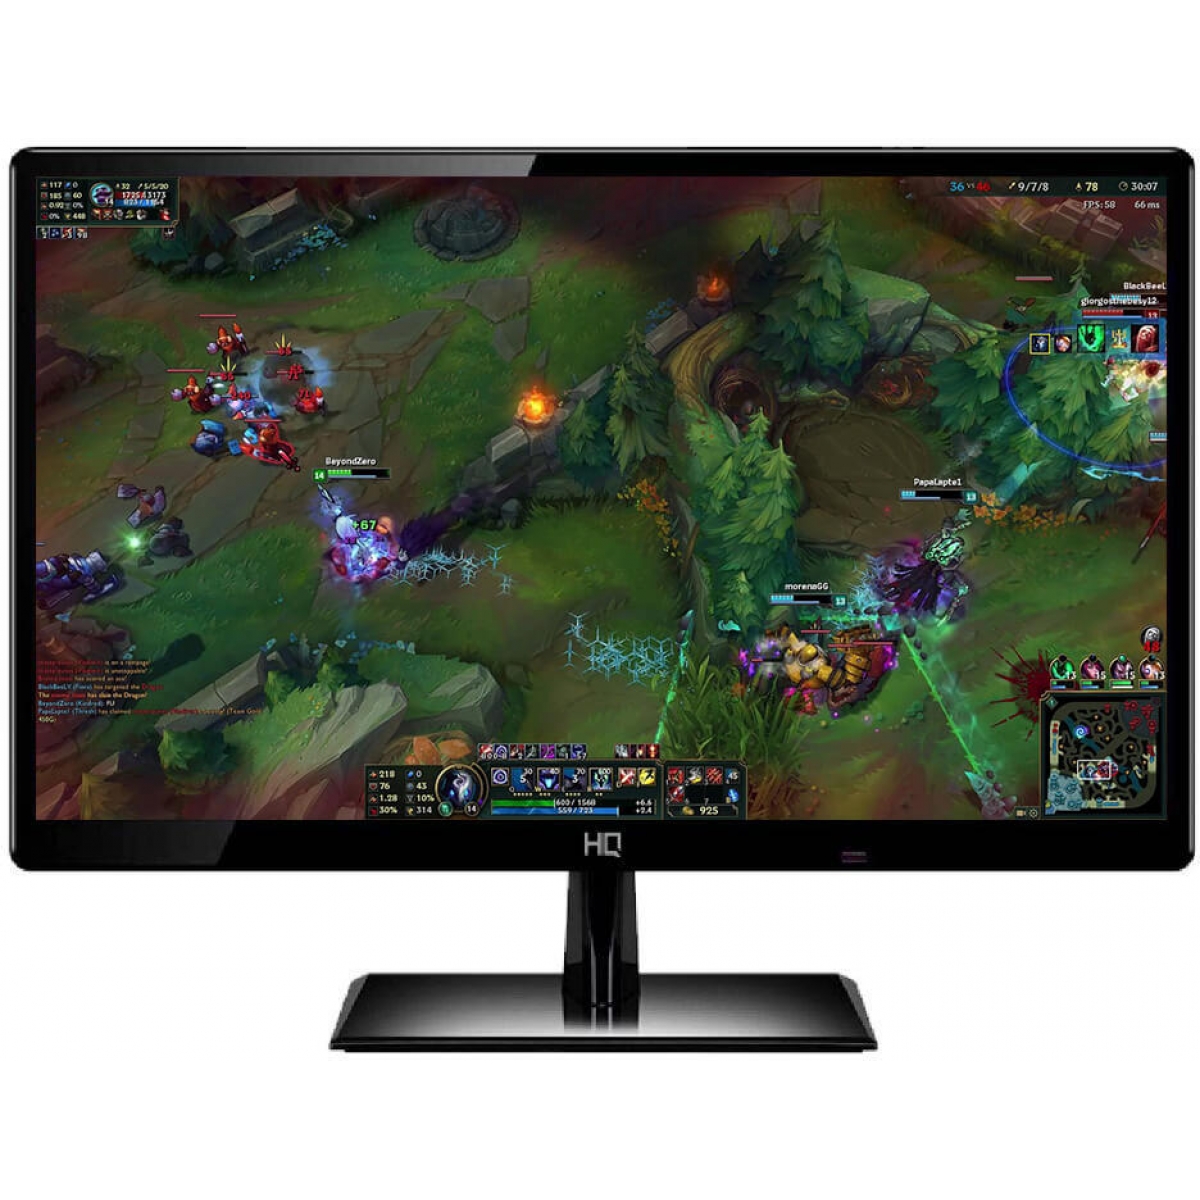 Monitor Gamer HQ 20 Pol, HD, HDMI/VGA